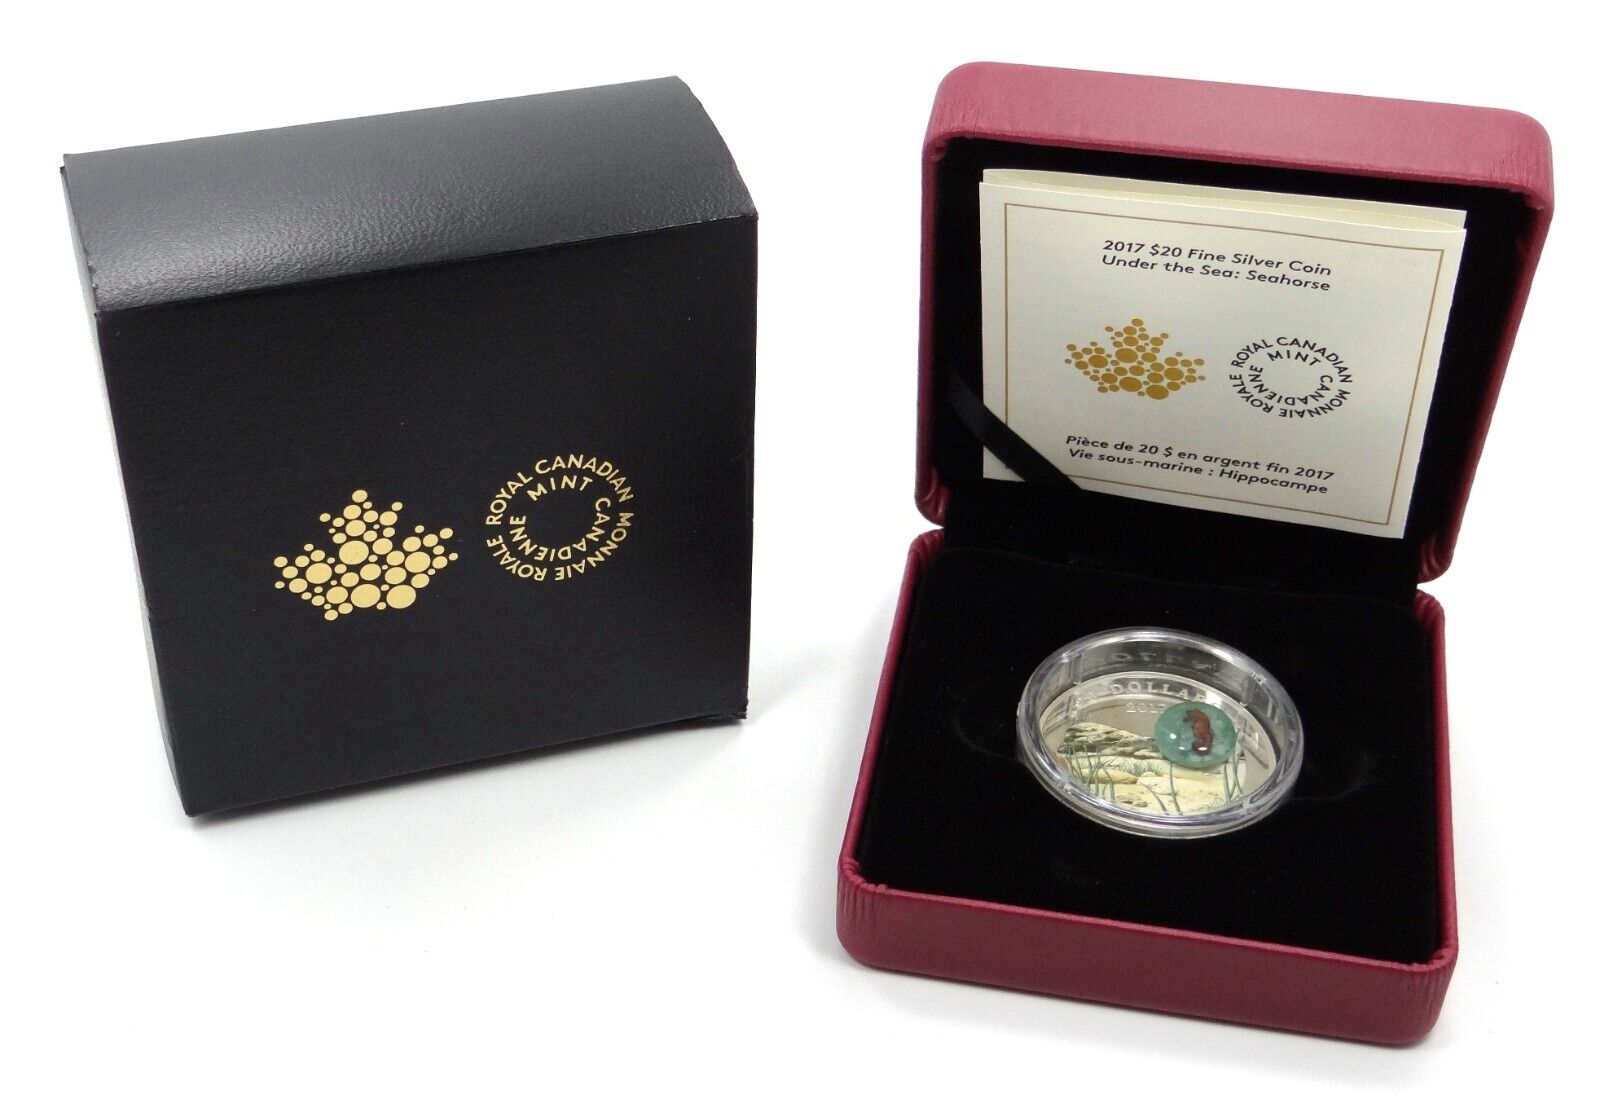 31.39g Silver Coin 2017 Canada $20 Murrini Glass Proof Under the Sea - Seahorse-classypw.com-9